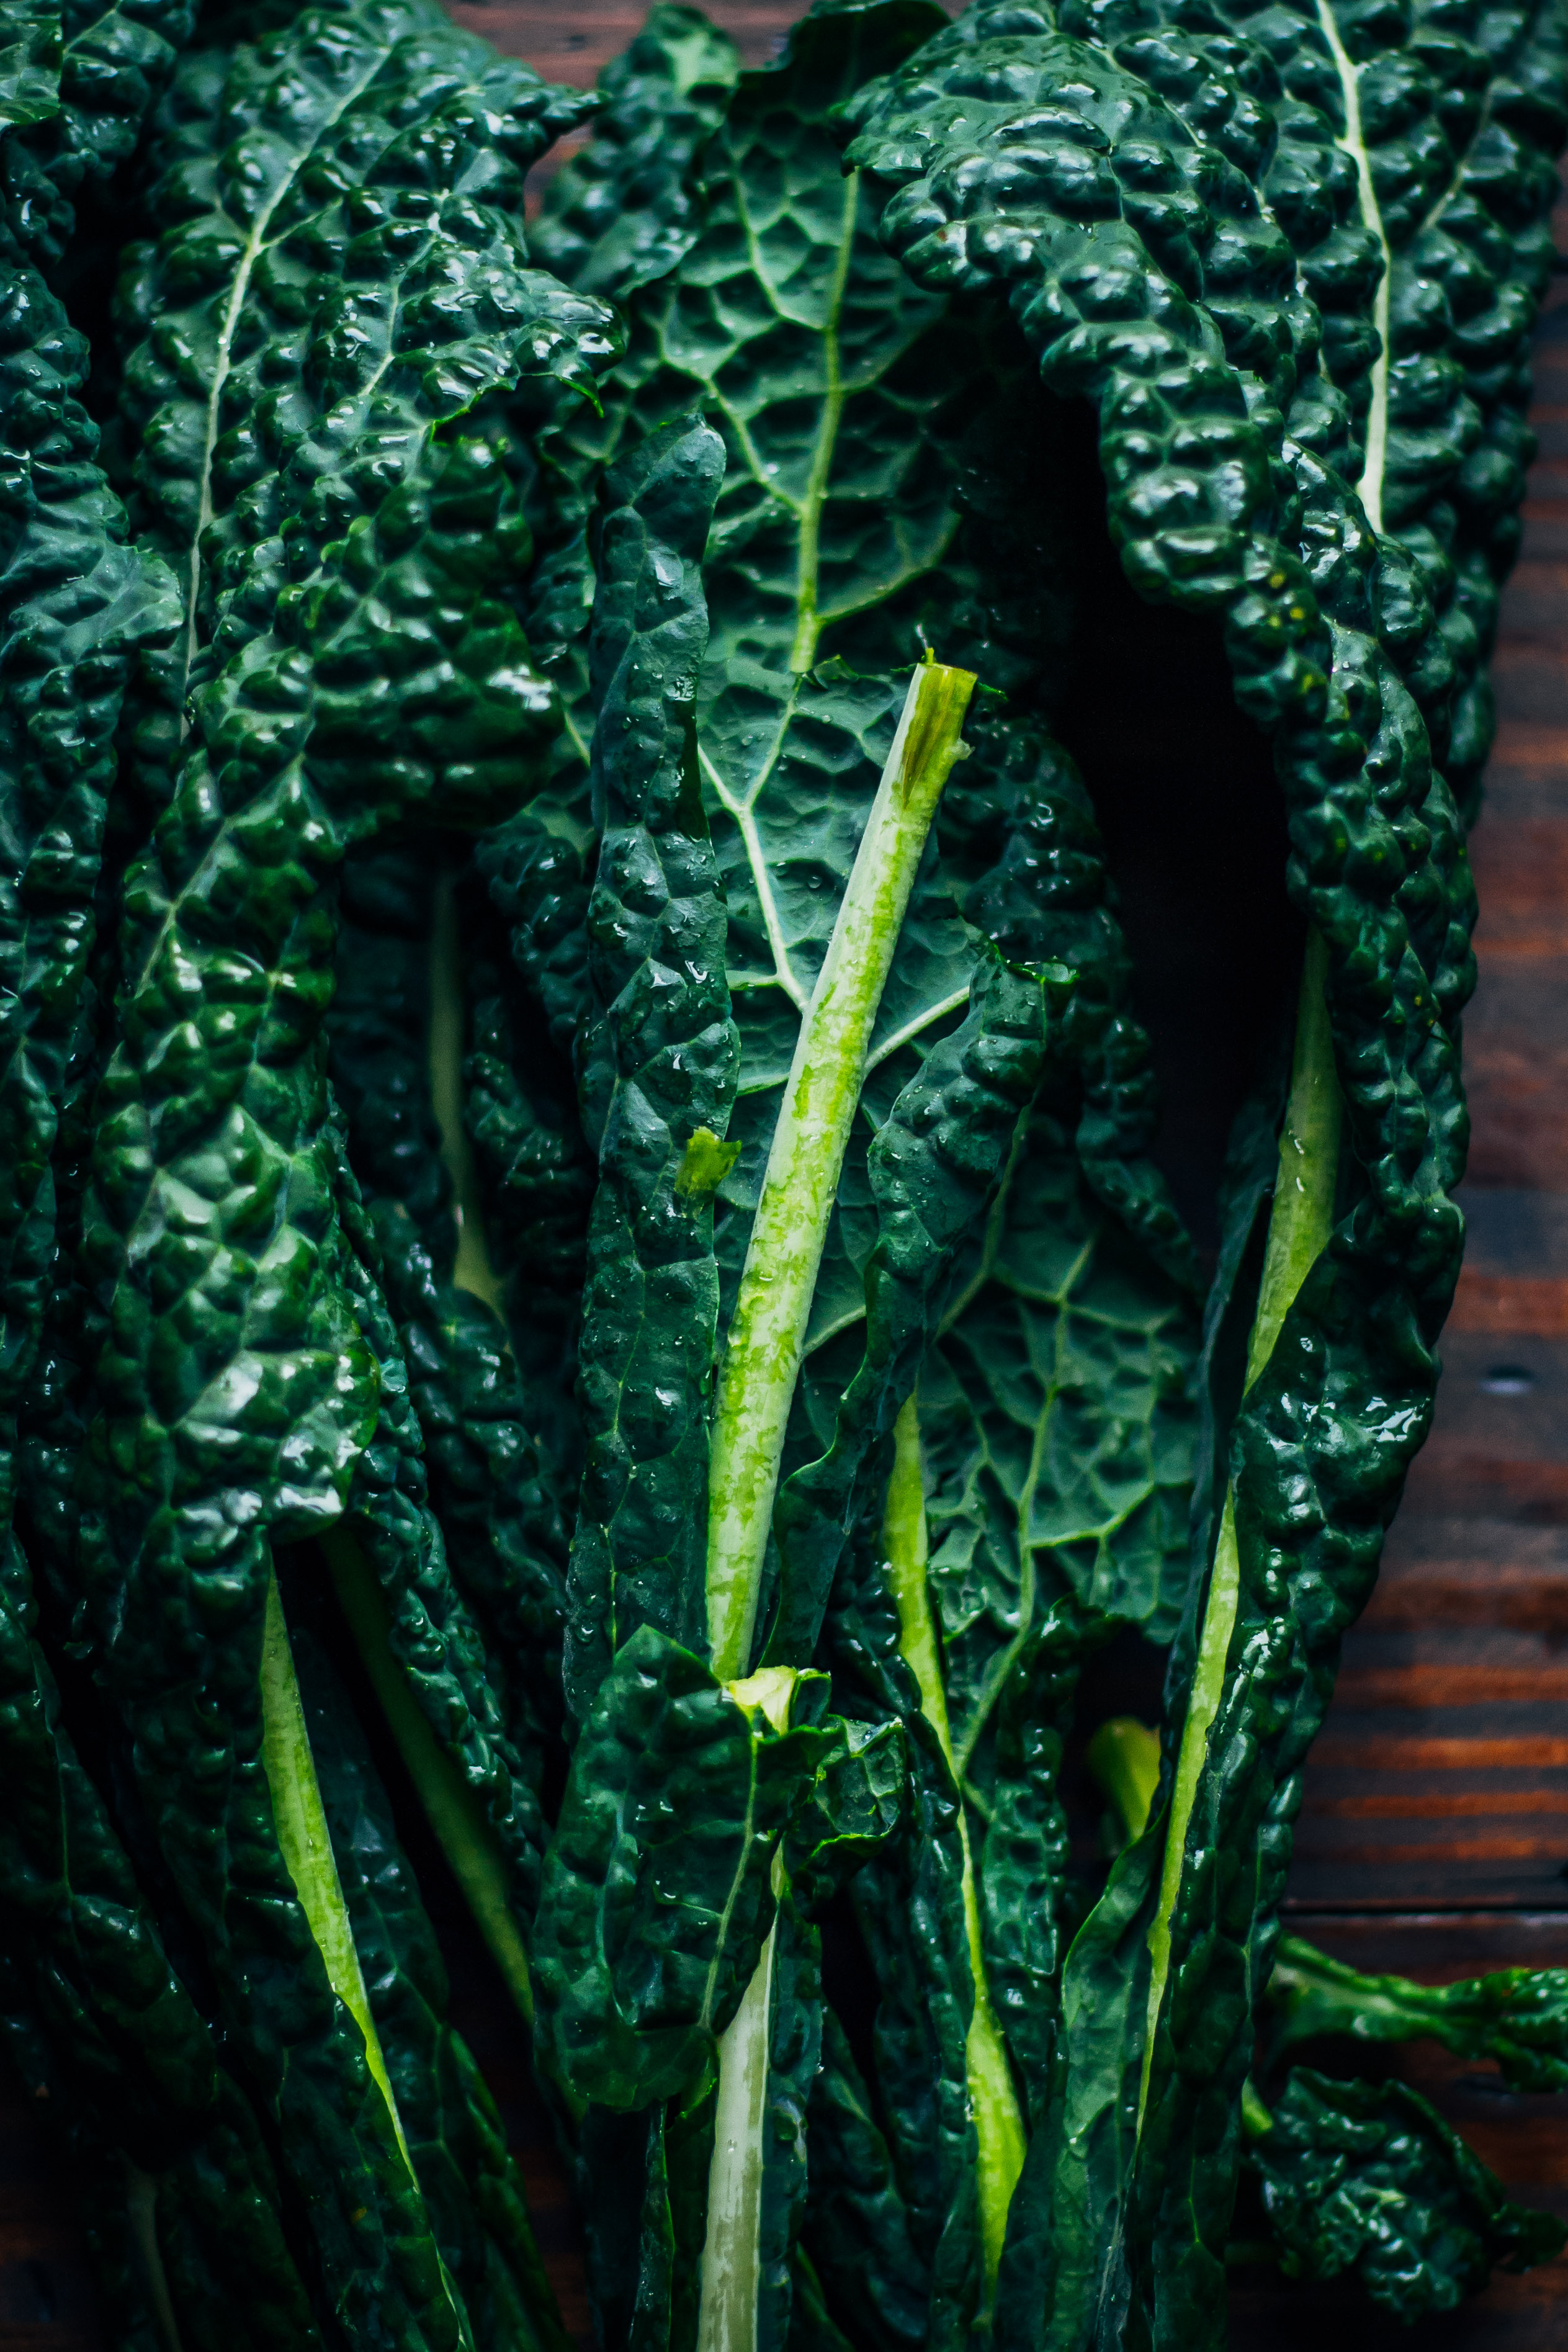 Kale Detox Salad w/ Pesto | Well and Full